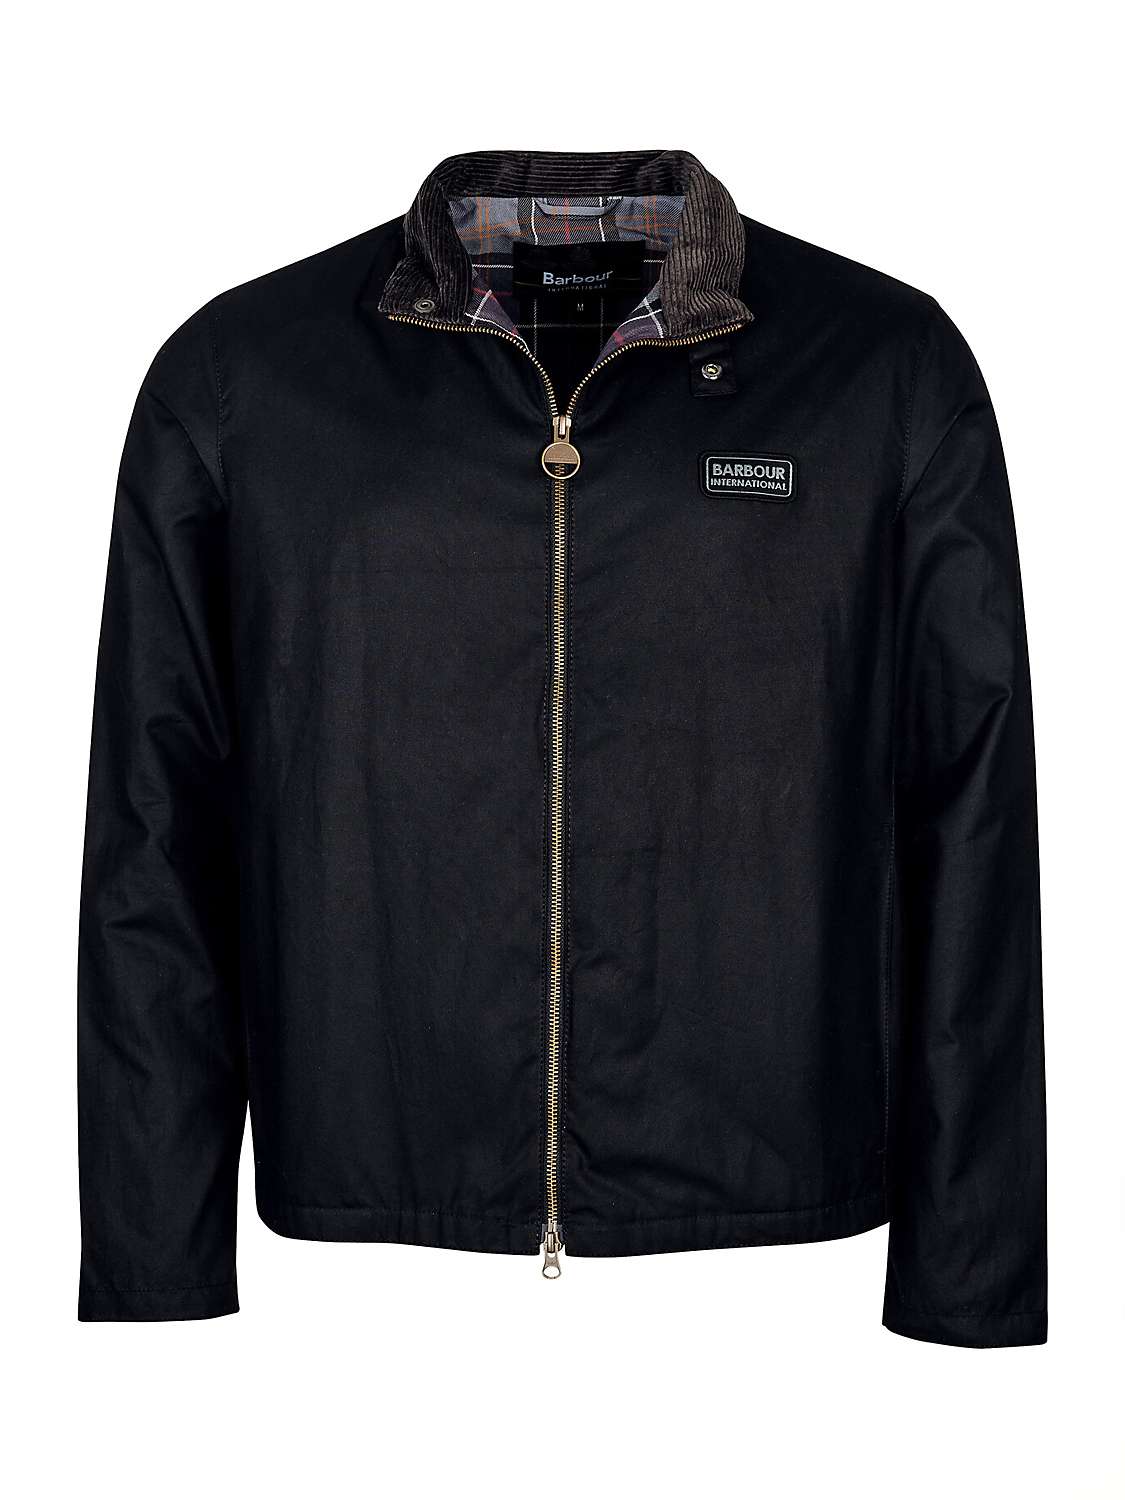 Barbour International Short Waxed Jacket, Black at John Lewis & Partners